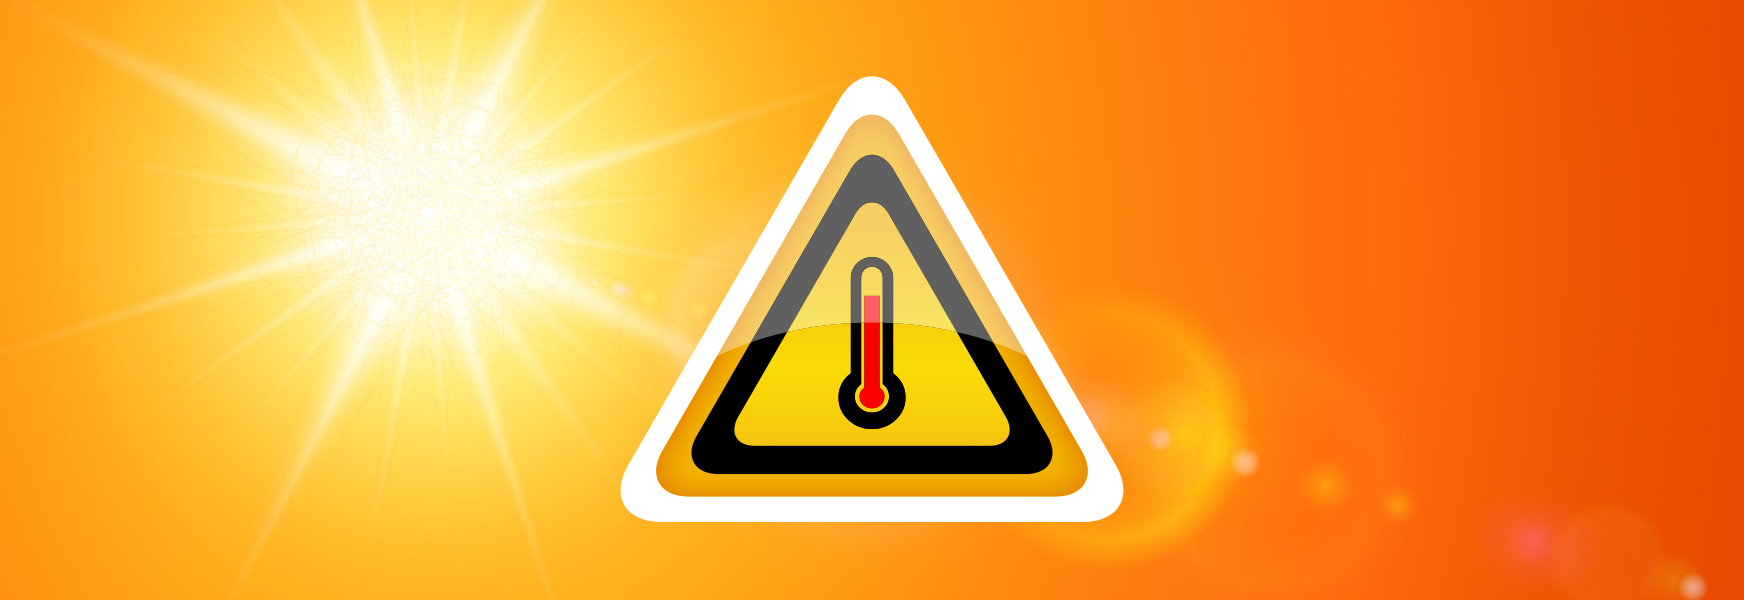 MEMIC Sends Heat Advisory to Policyholders